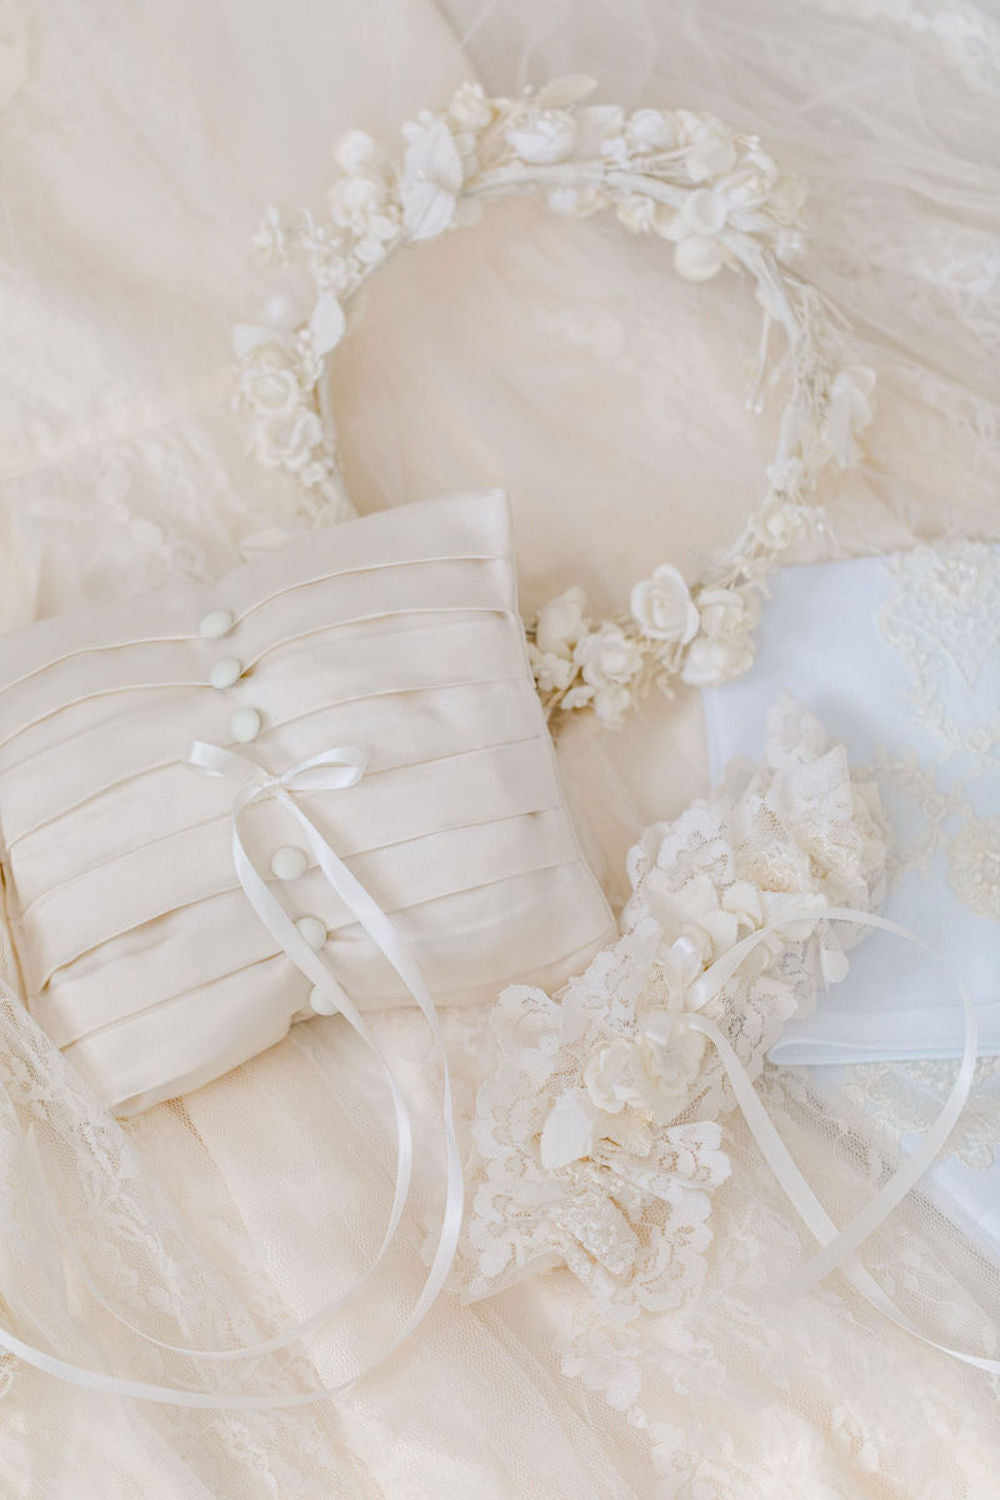 custom wedding garter heirloom and ring pillow made from mother's wedding dress by The Garter Girl